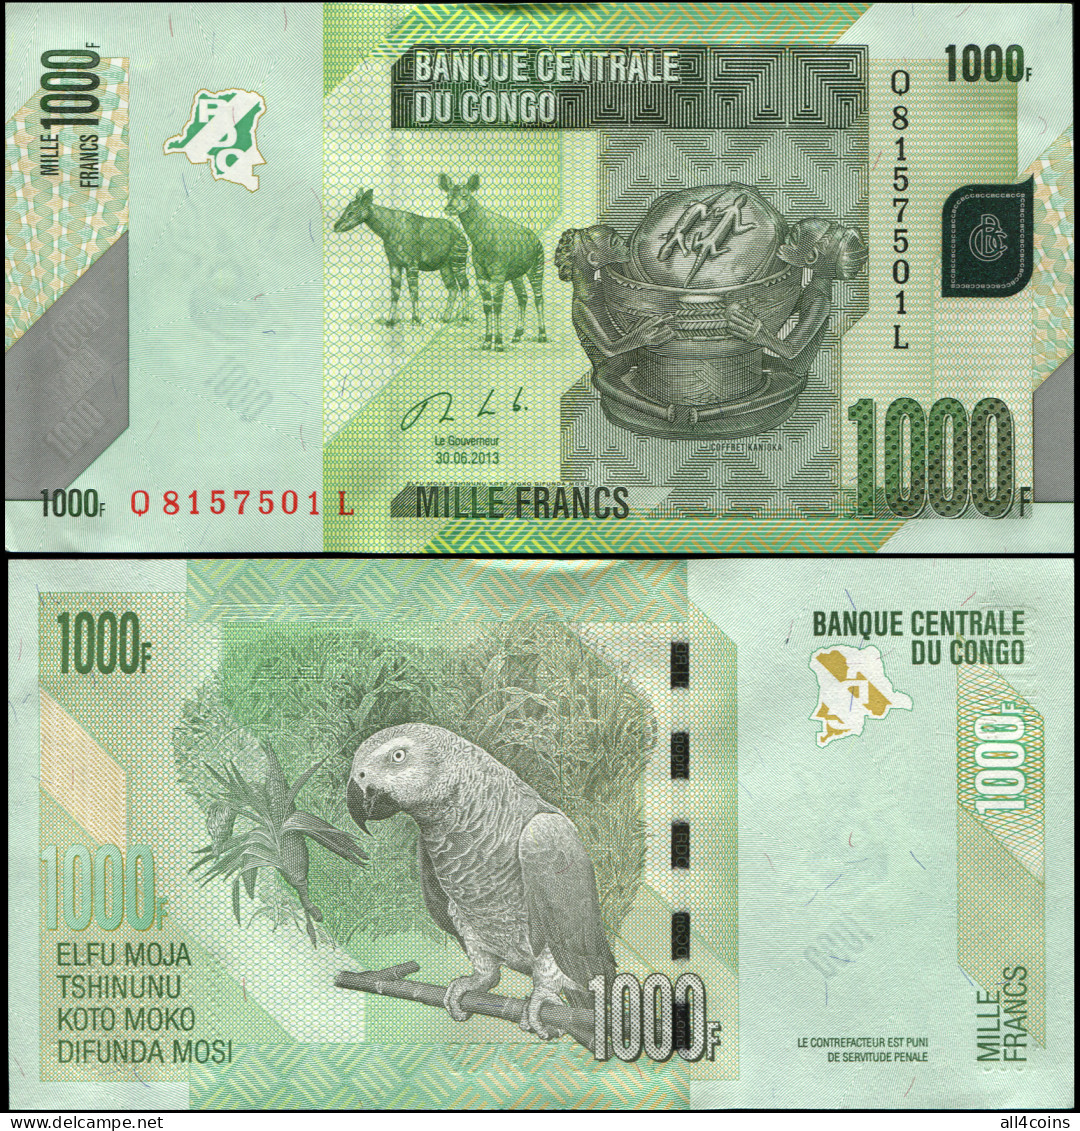 DR Congo 1000 Francs. 30.06.2013 Unc. Banknote Cat# P.101b - Demokratische Republik Kongo & Zaire